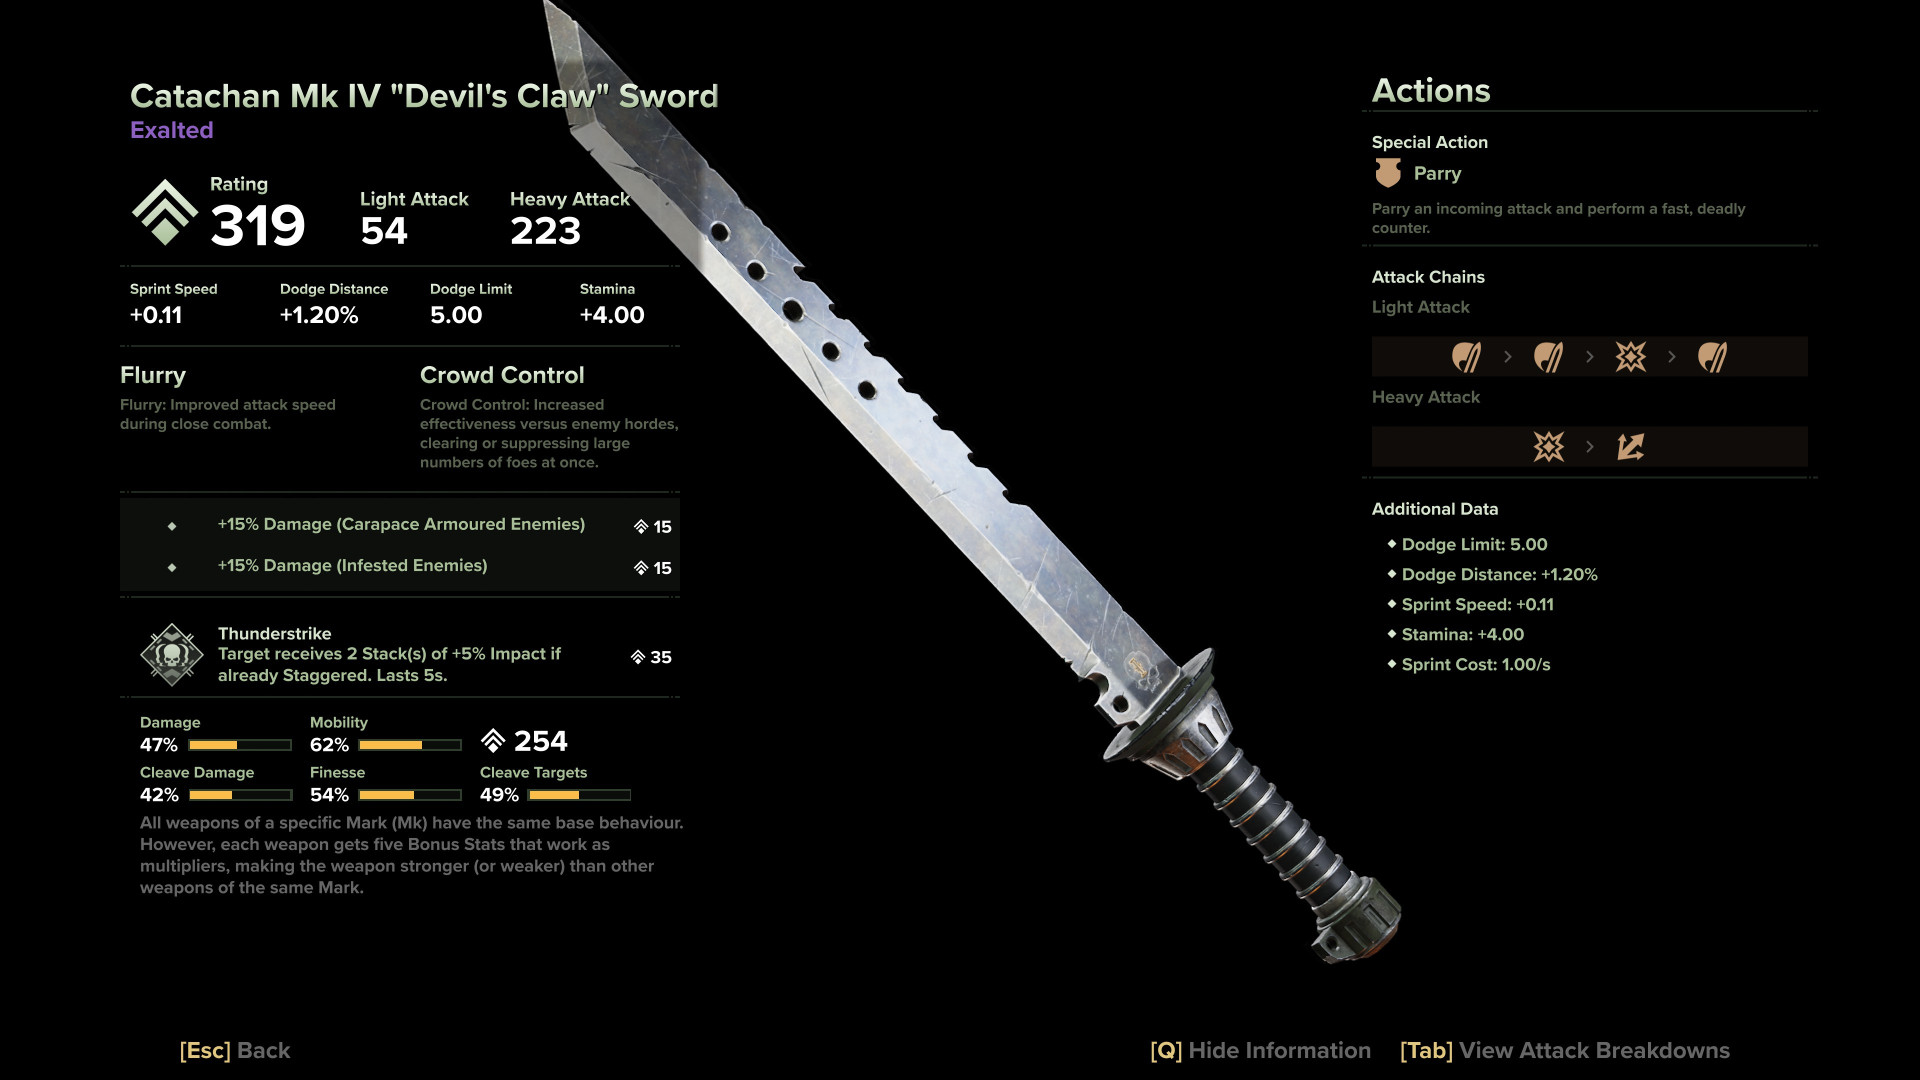 Catachan Mk IV "Devil's Claw" Sword